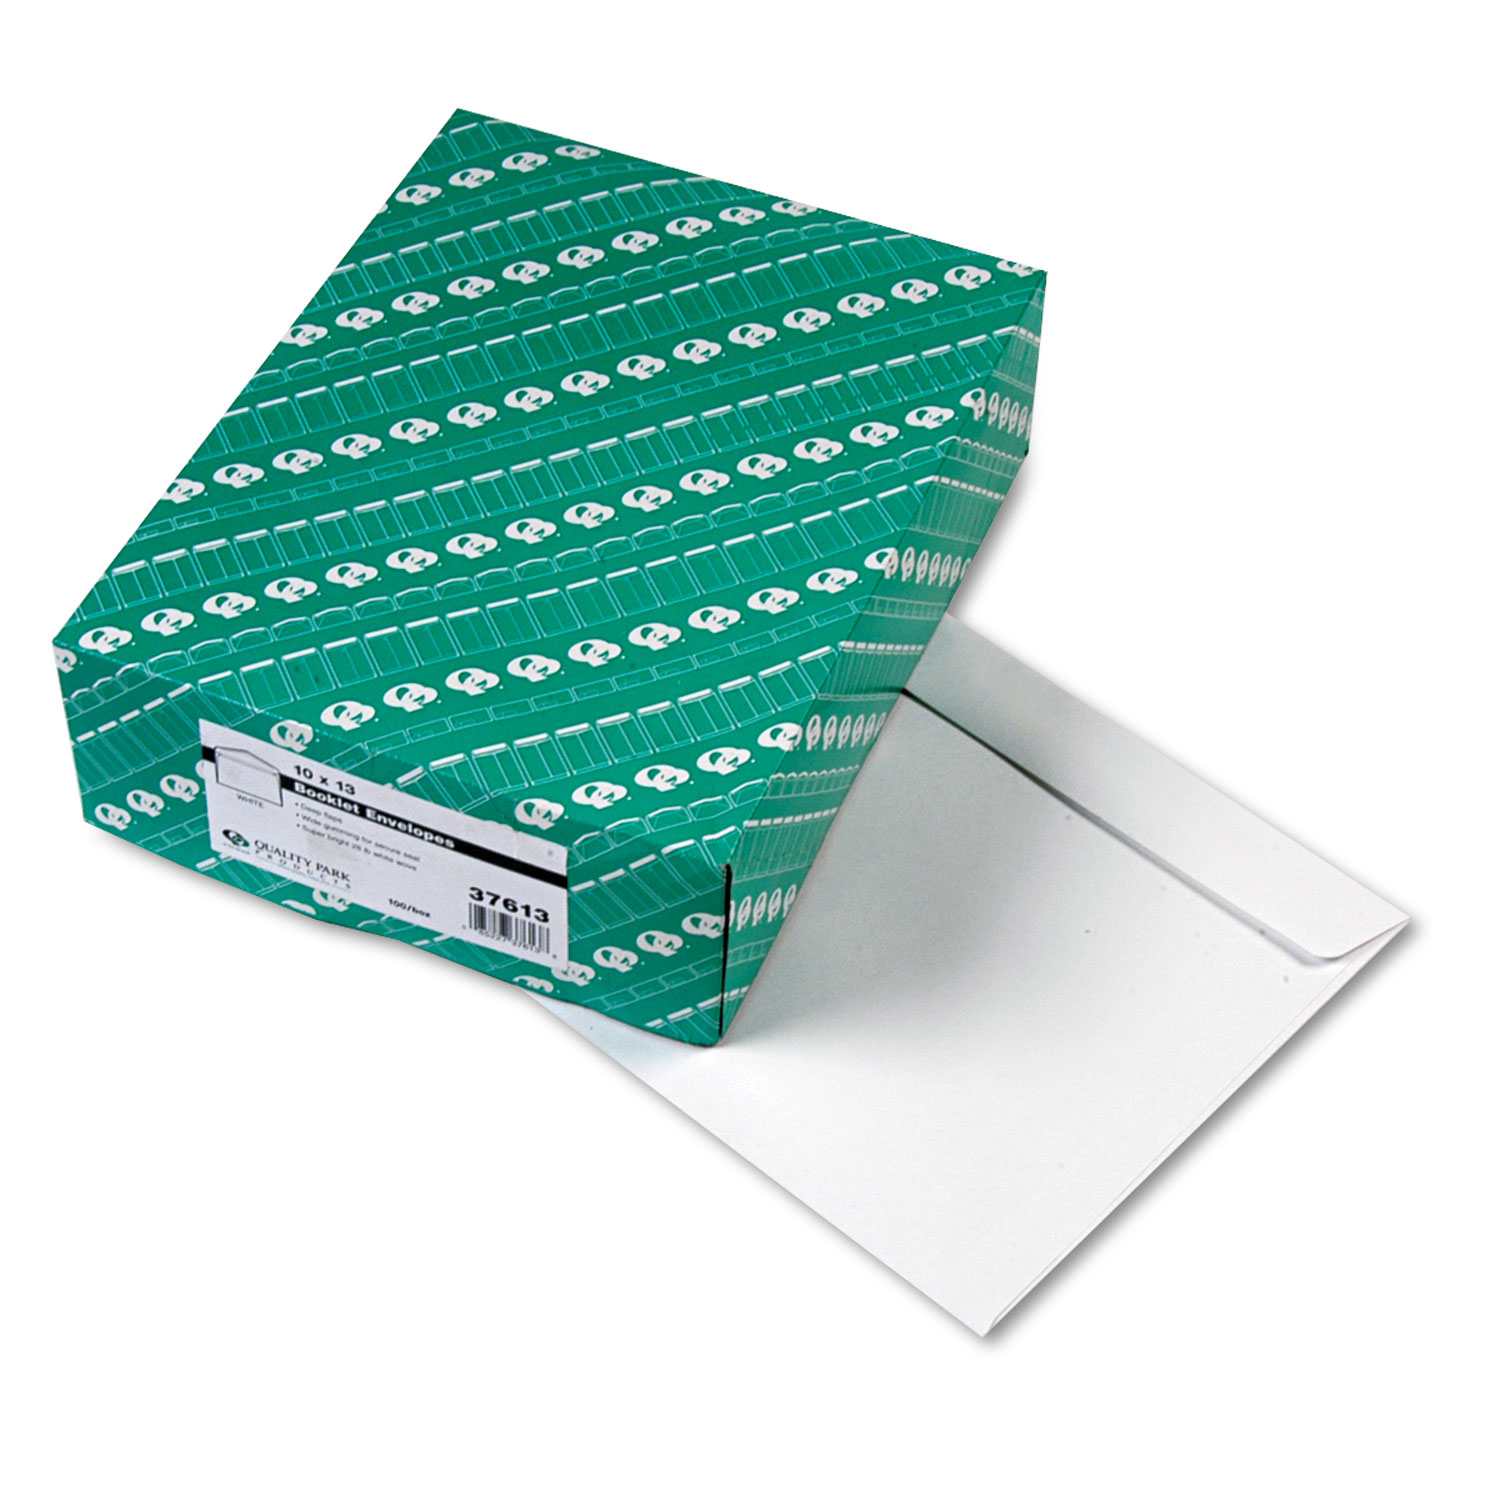  Quality Park QUA37613 Open-Side Booklet Envelope, #13 1/2, Cheese Blade Flap, Gummed Closure, 10 x 13, White, 100/Box (QUA37613) 